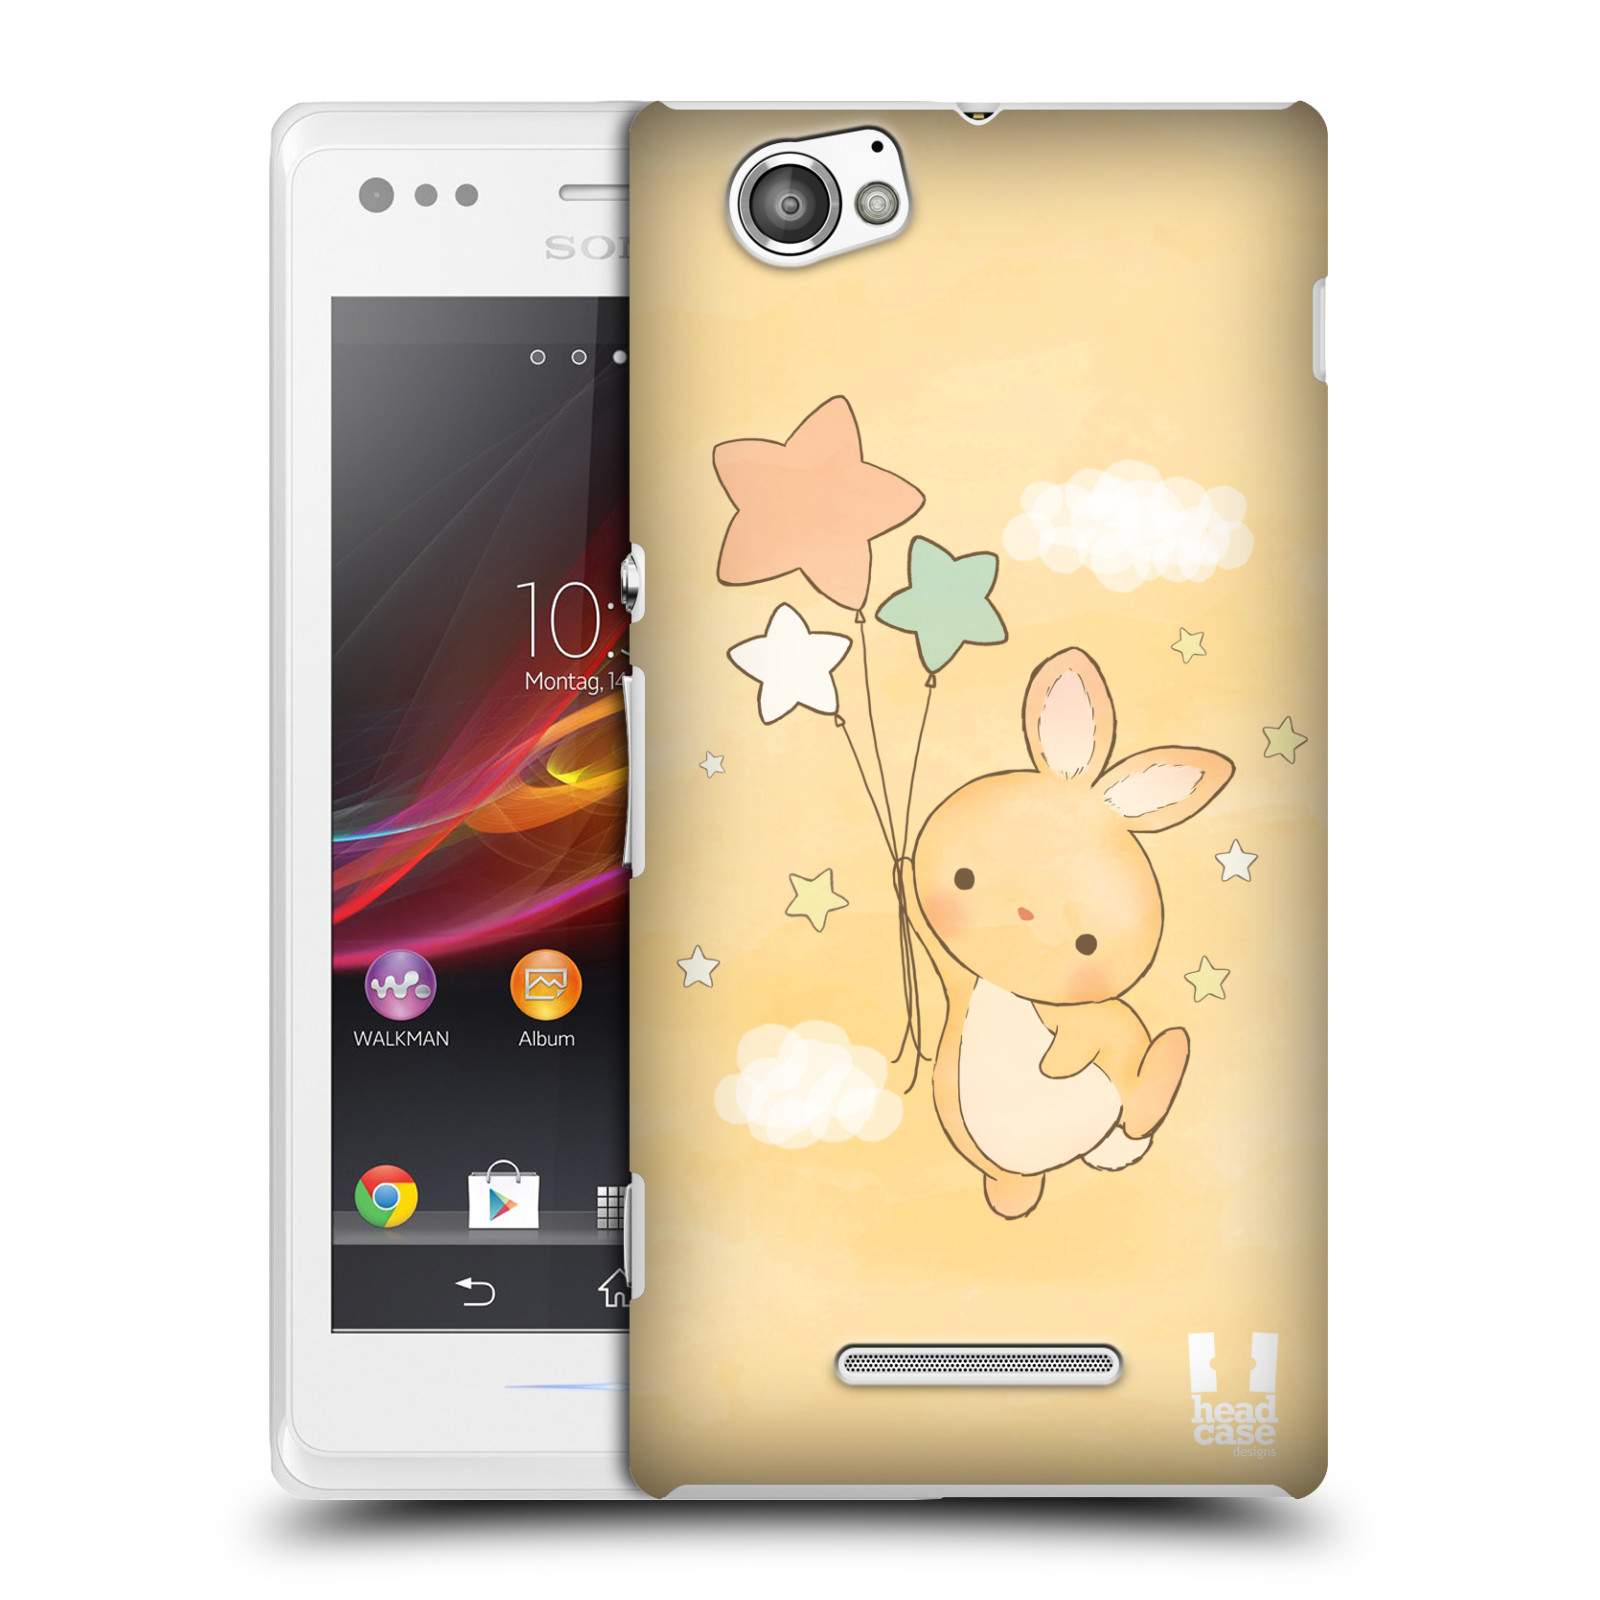 HEAD CASE plastový obal na mobil Sony Xperia M vzor králíček a hvězdy žlutá